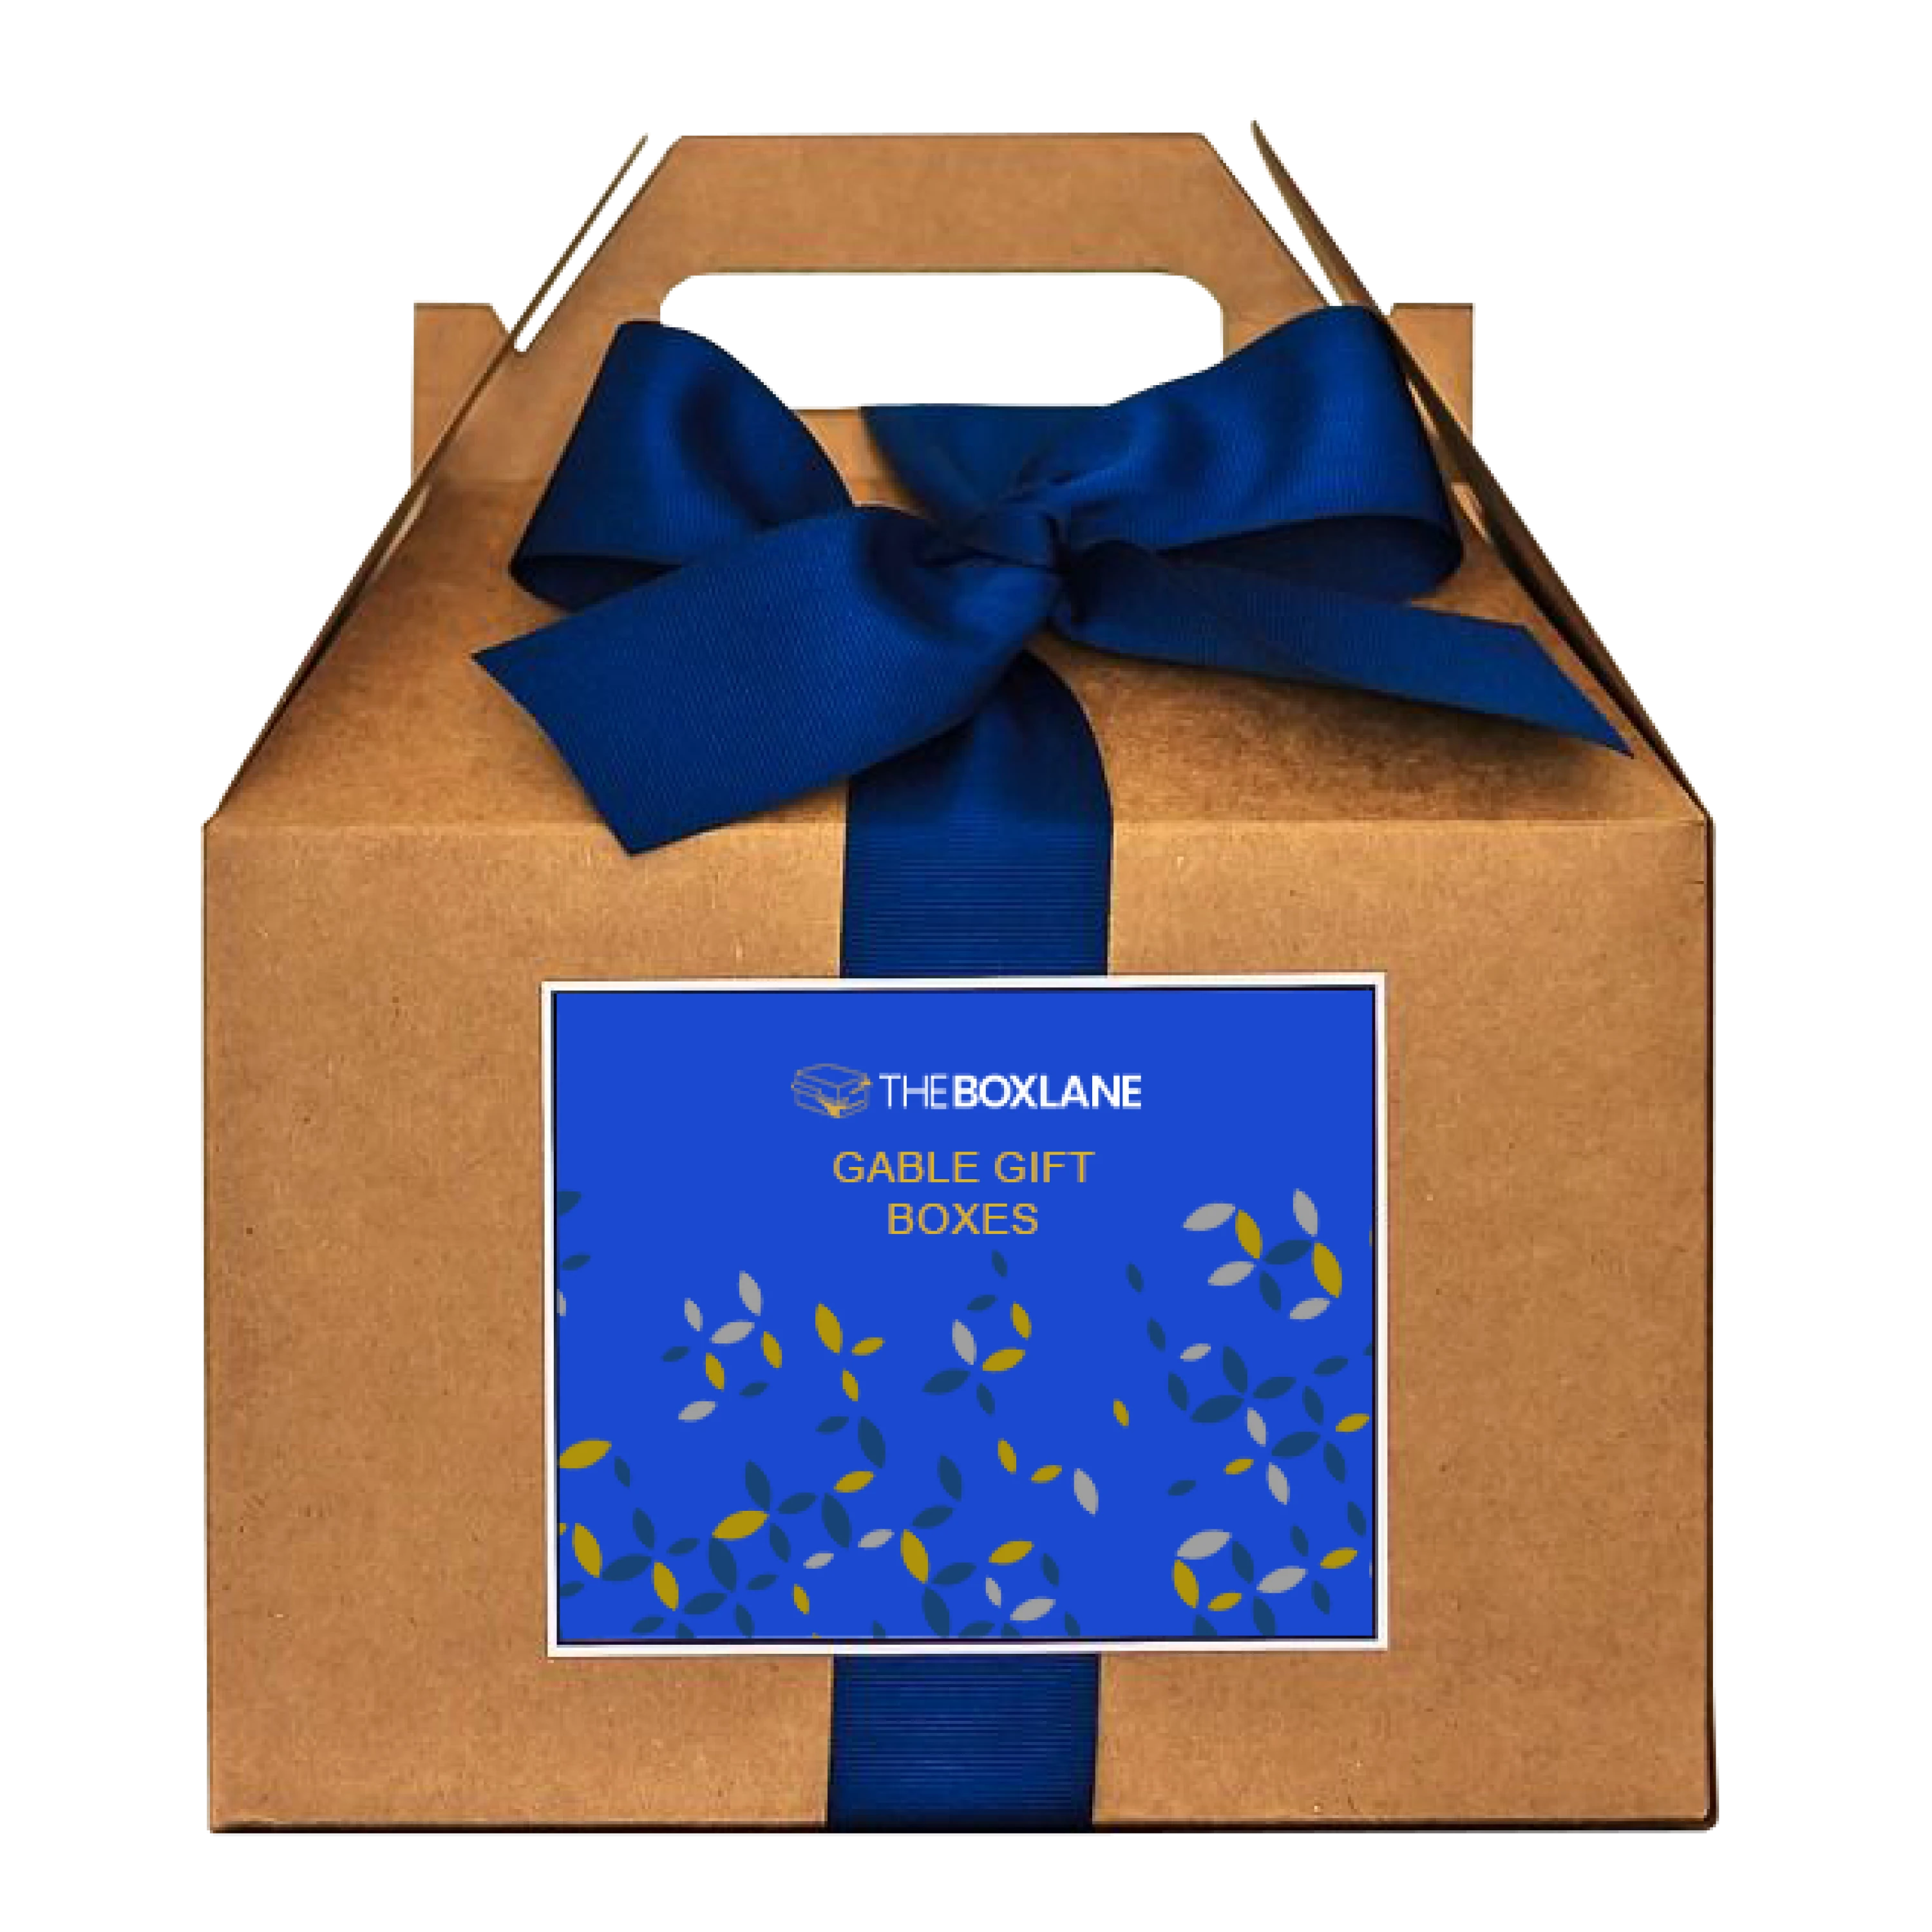 Carousel gable gift boxes packaging image 4 | The Box Lane